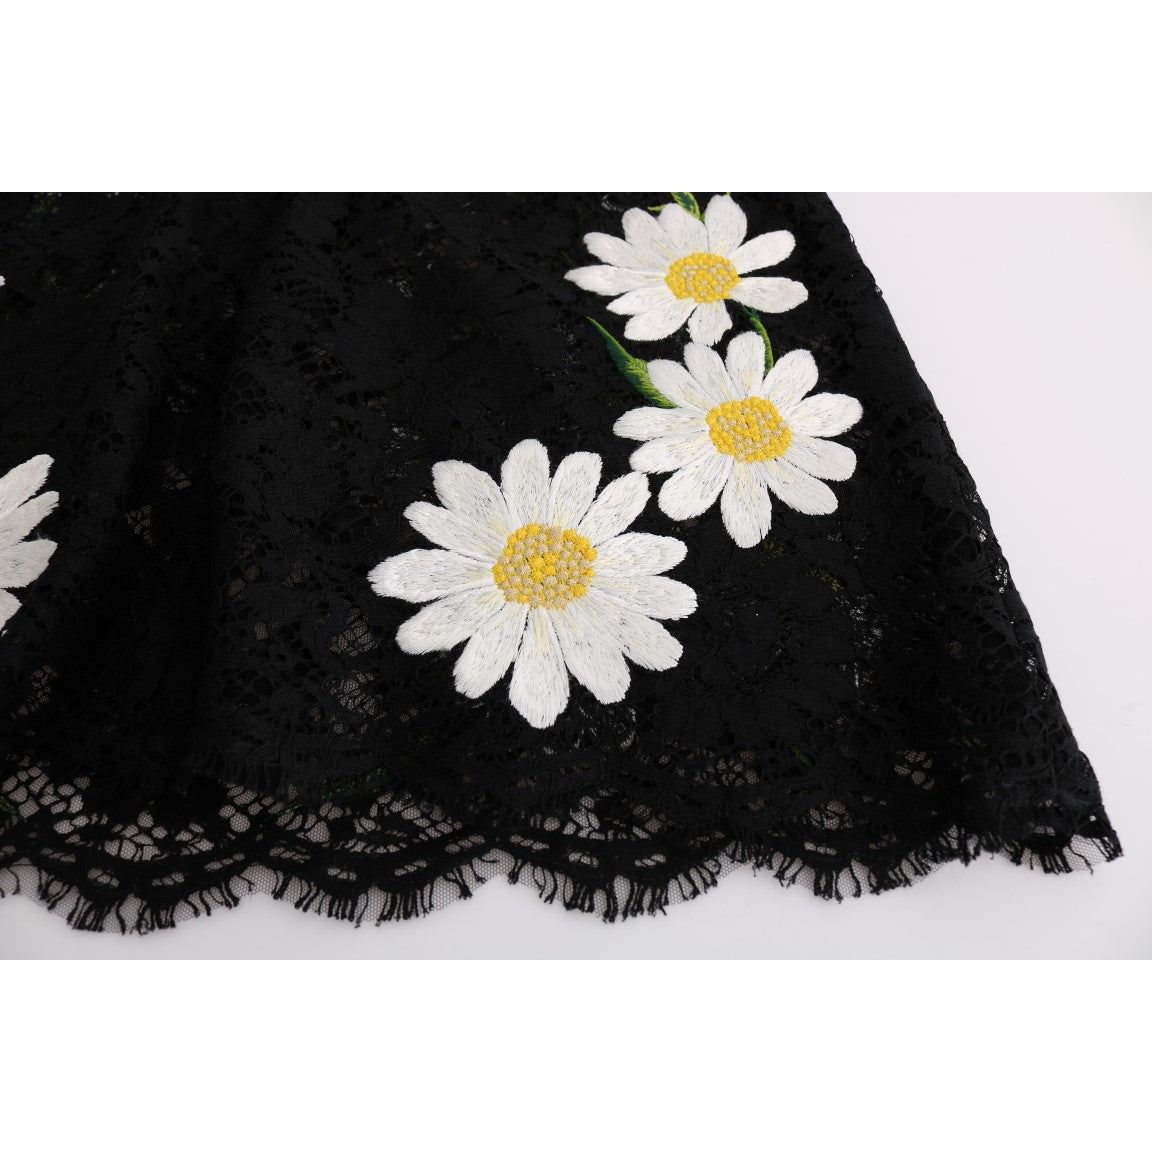 Dolce & Gabbana Black Floral Lace Chamomile Embroidered Dress black-floral-lace-chamomile-sicily-dress 450625-black-floral-lace-chamomile-sicily-dress-4.jpg